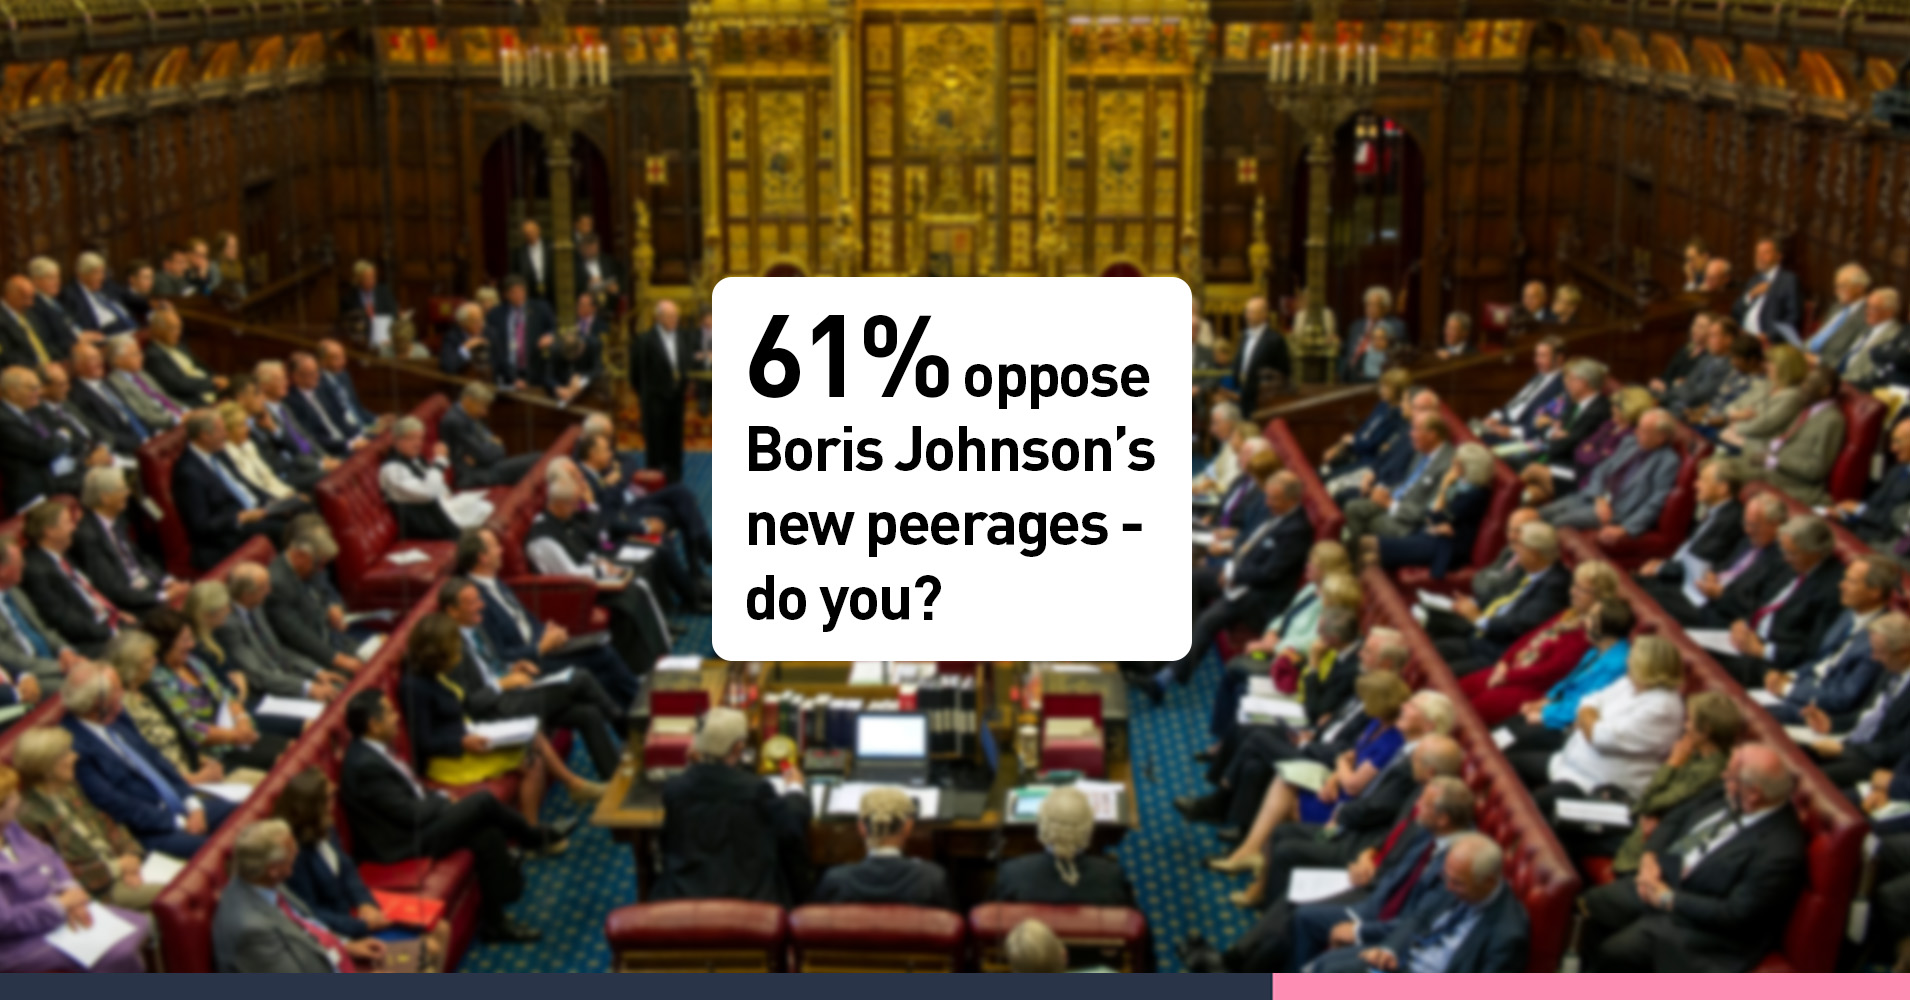 61% oppose Boris Johnson's new peerages